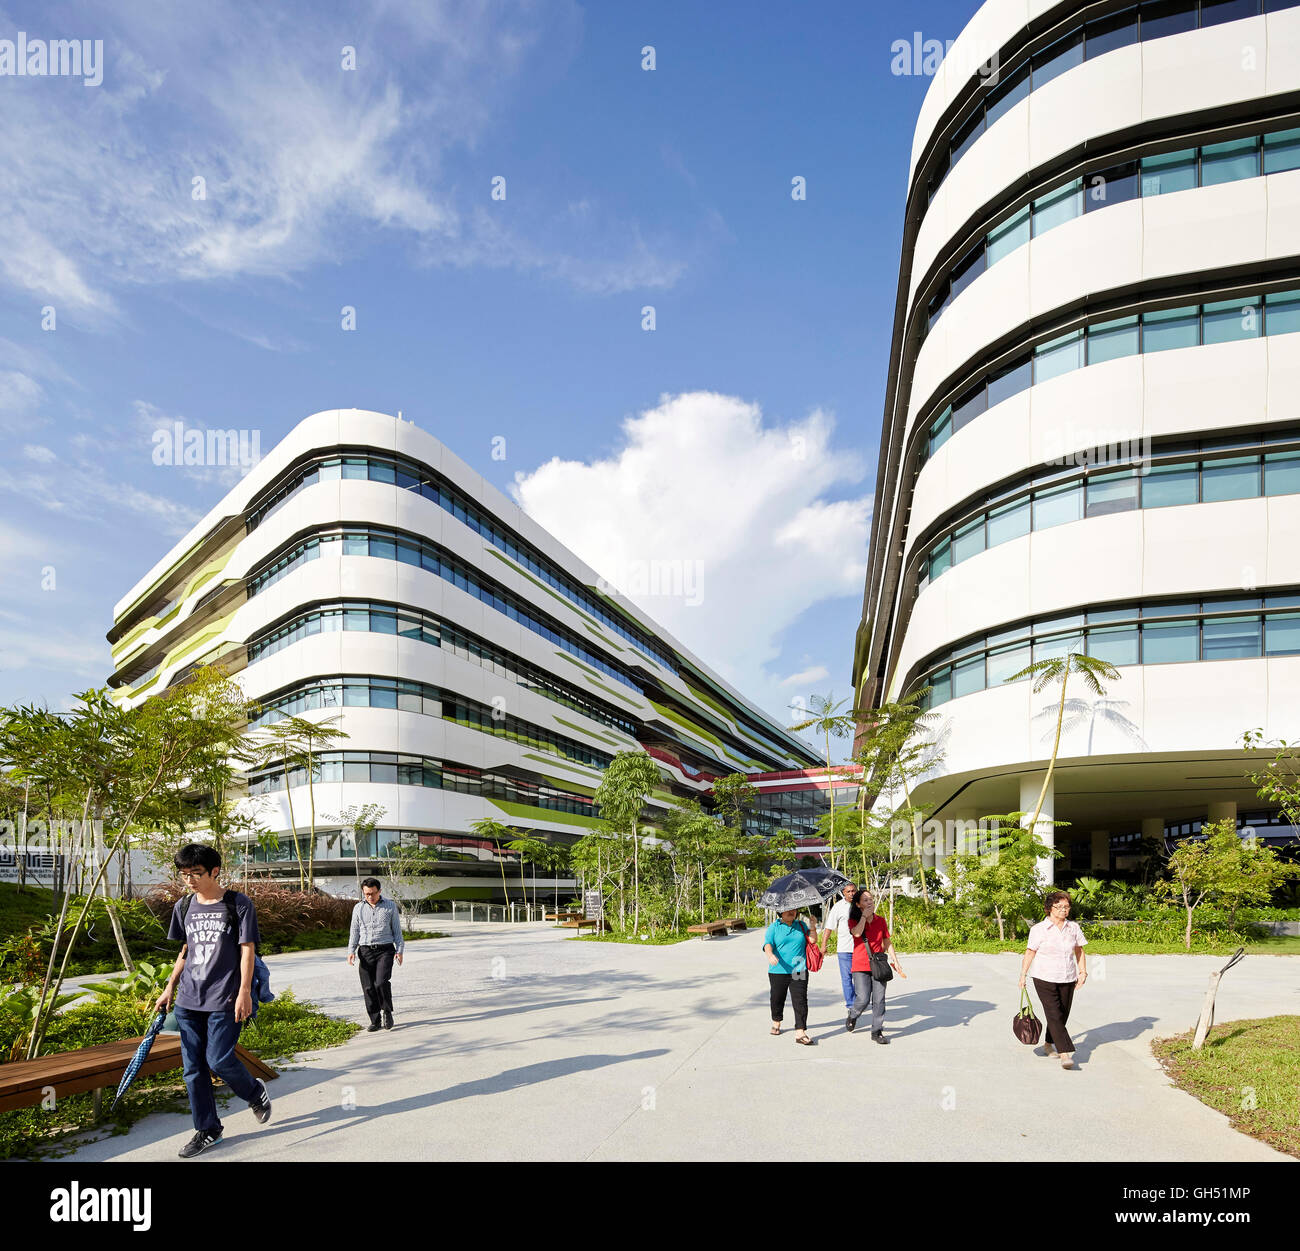 Campus walkways with white building facades. Singapore University of Technology and Design, Singapore, Singapore. Architect: UNStudio, 2015. Stock Photo